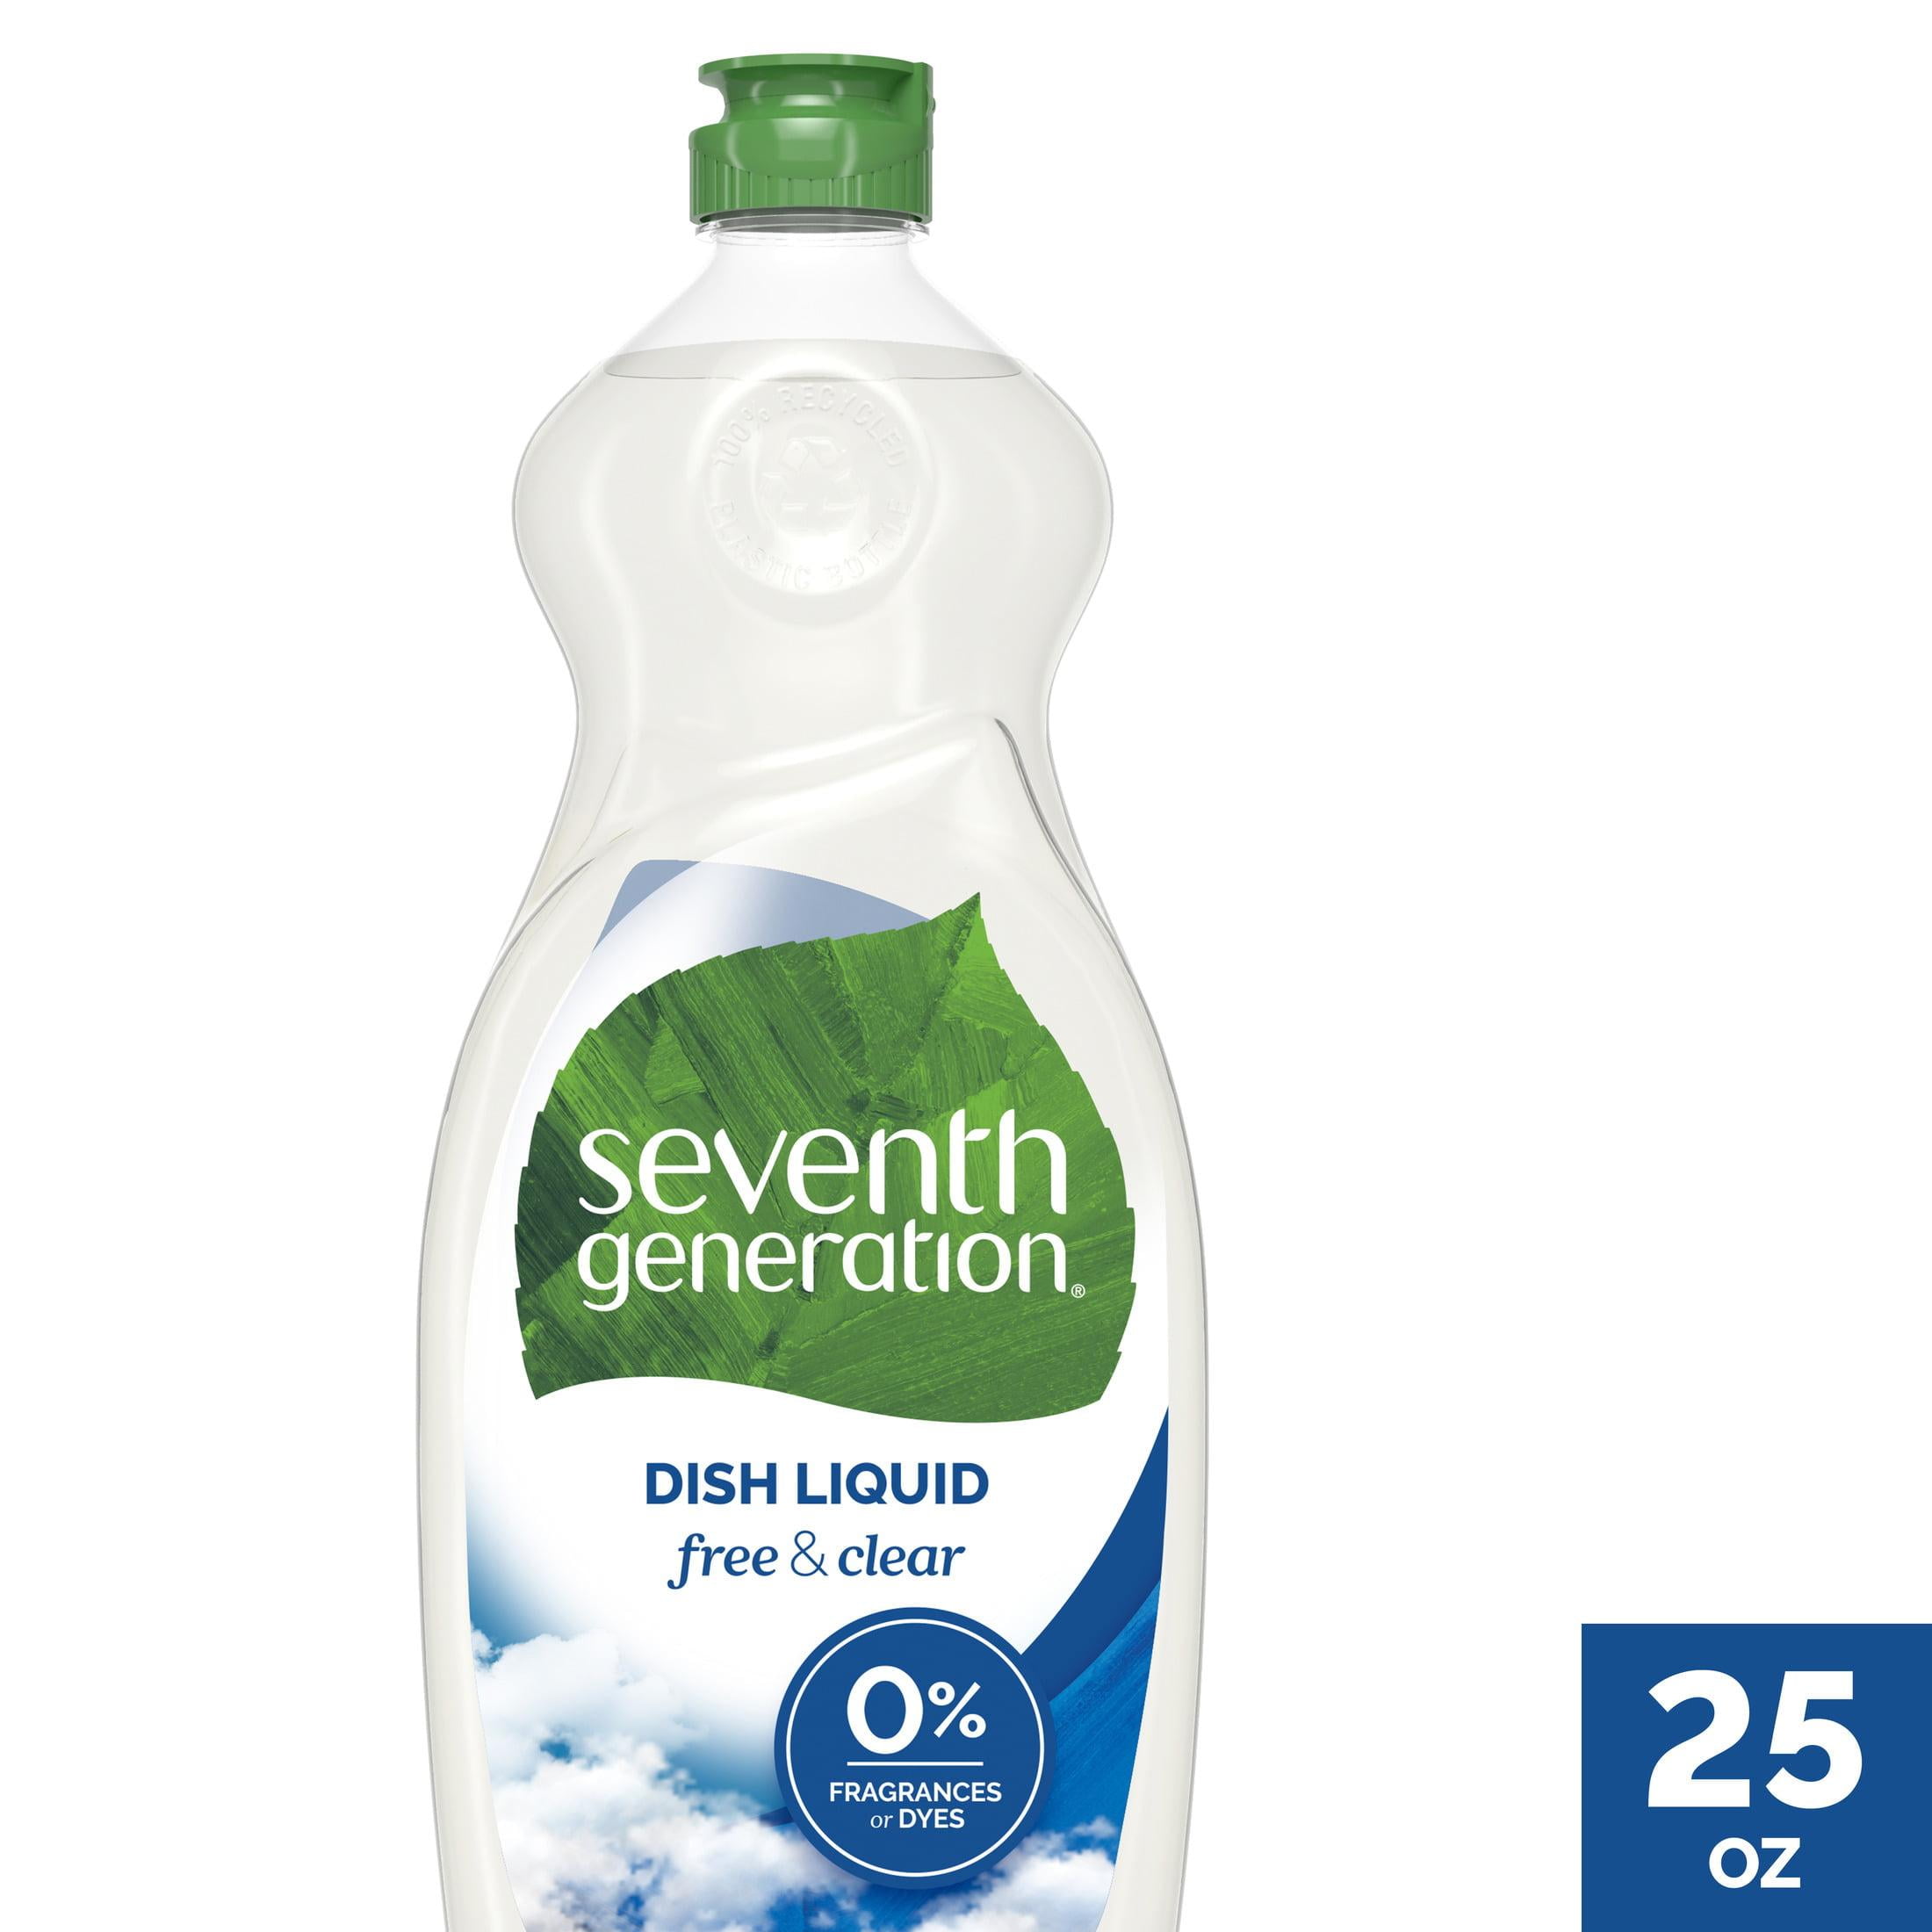 Seventh Generation Dish Soap Liquid, Fragrance Free, 19 oz, Pack of 6